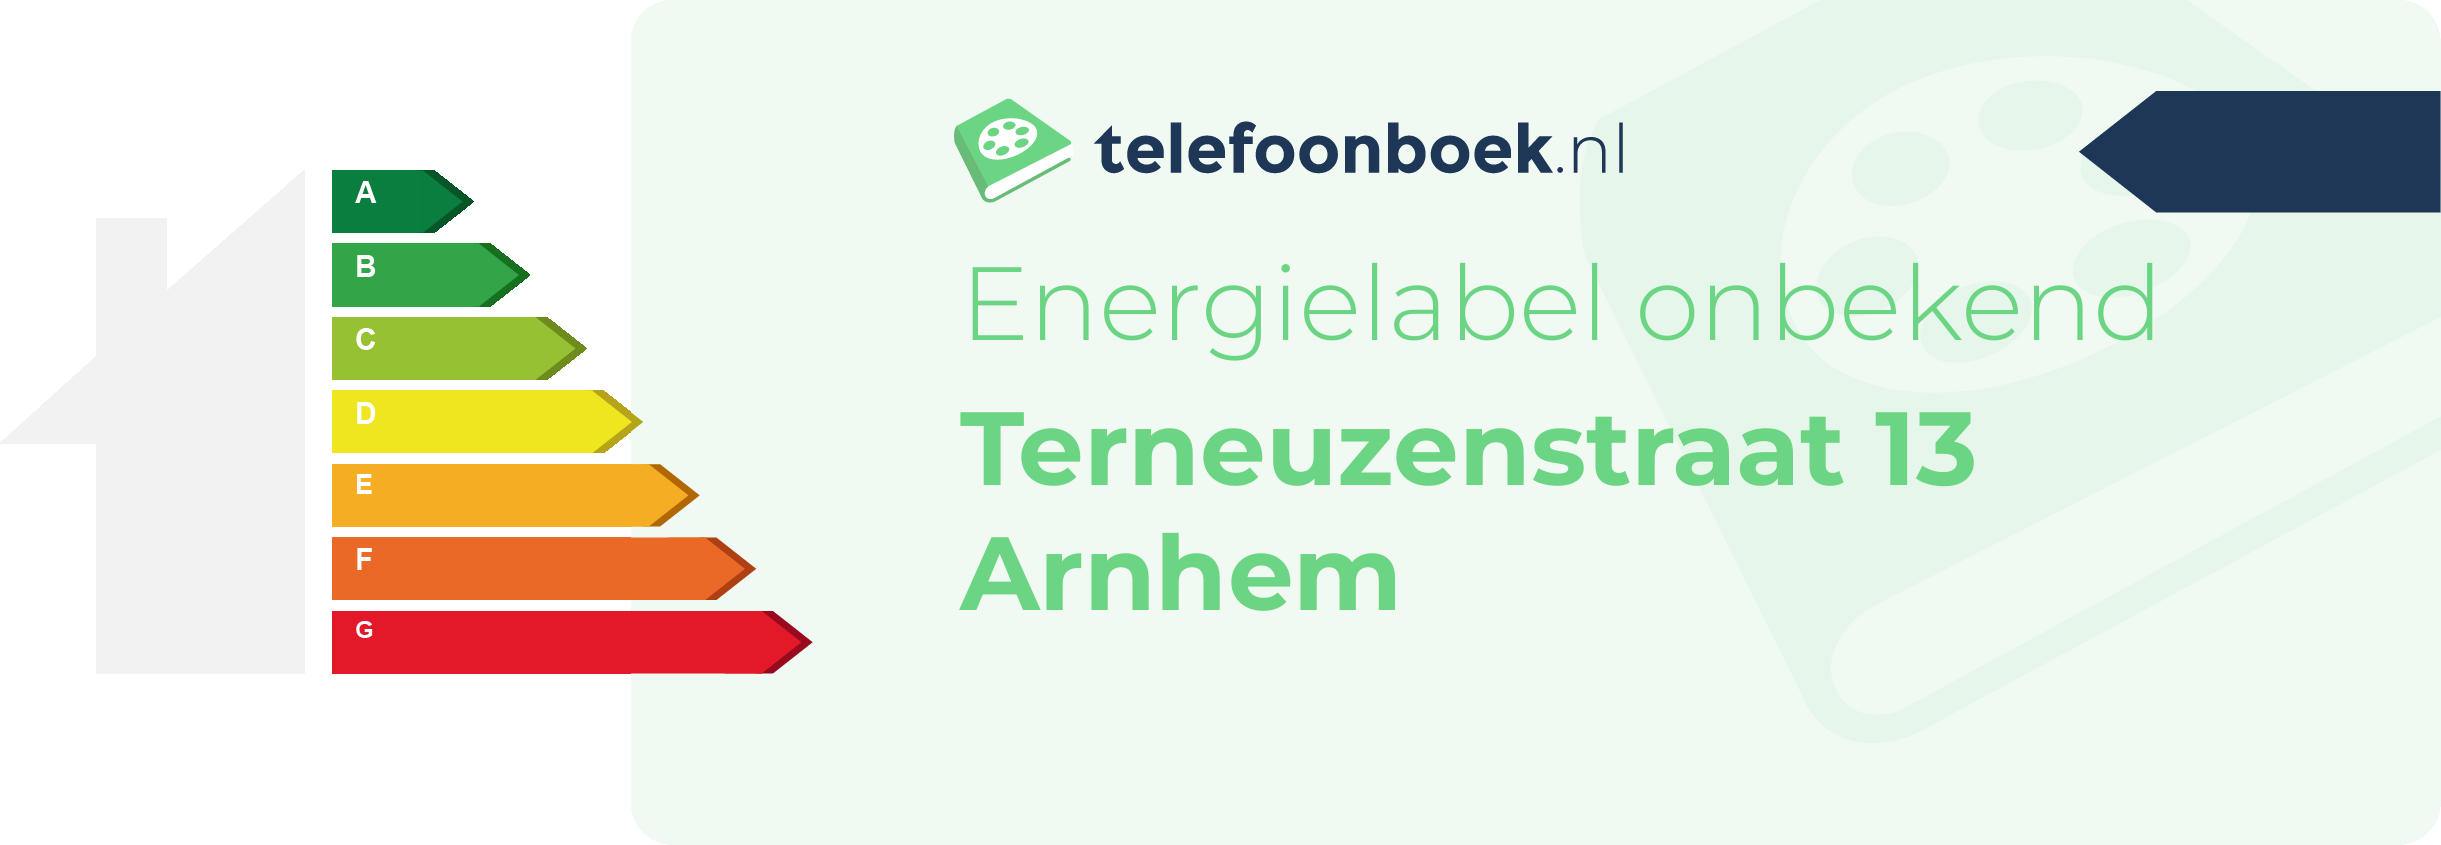 Energielabel Terneuzenstraat 13 Arnhem